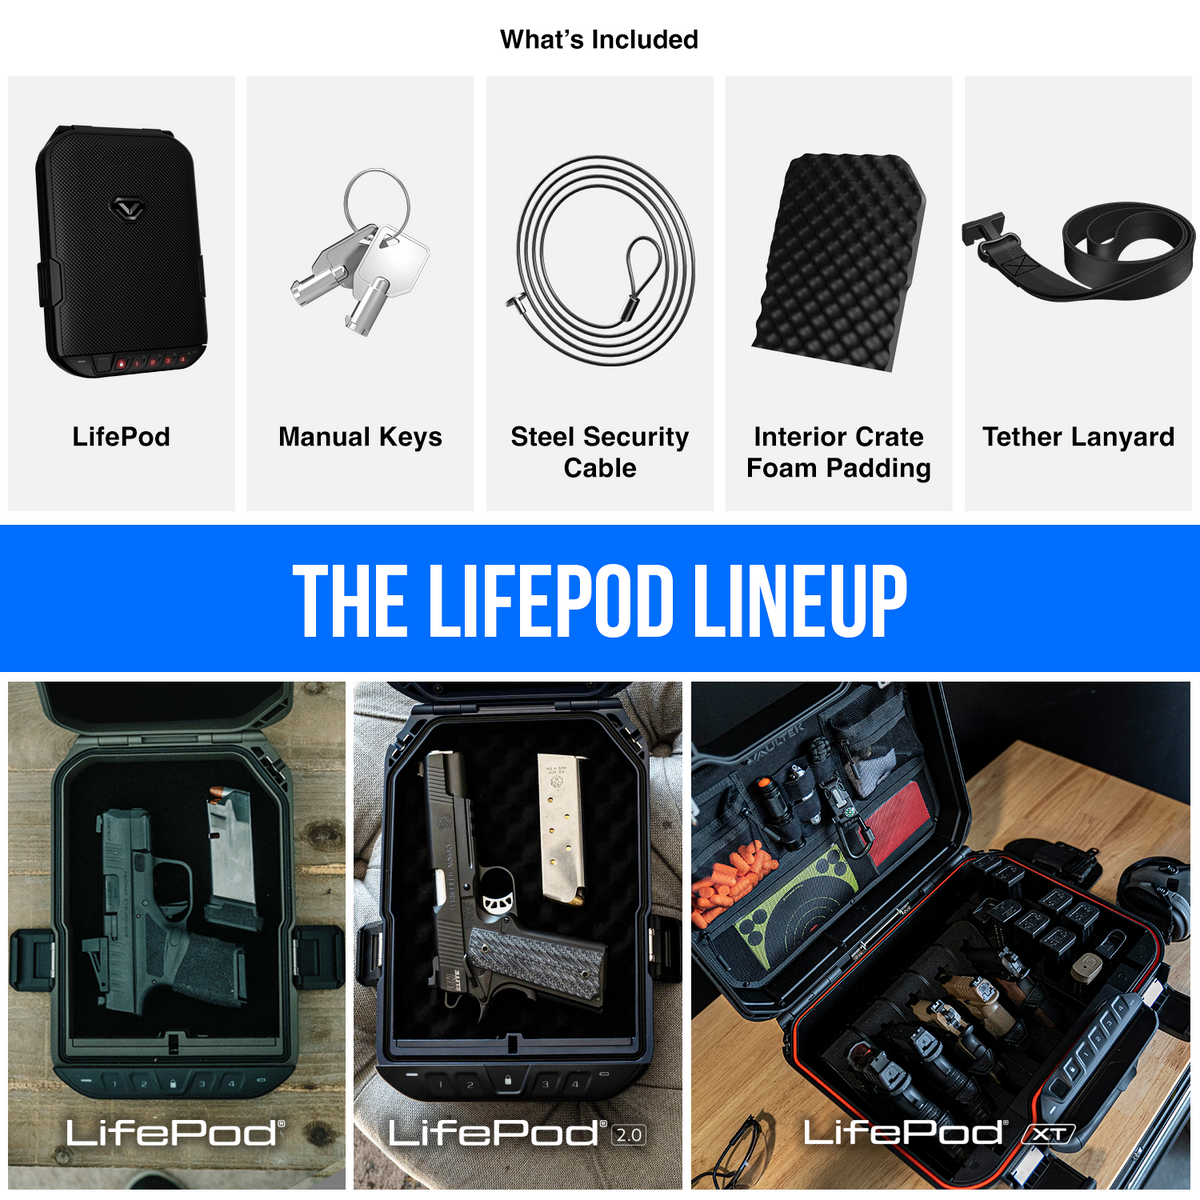 Vaultek - lifepod 1.0 secure weather resistant biometric and keypad gun safe with built-in lock system - features - MODLOCK